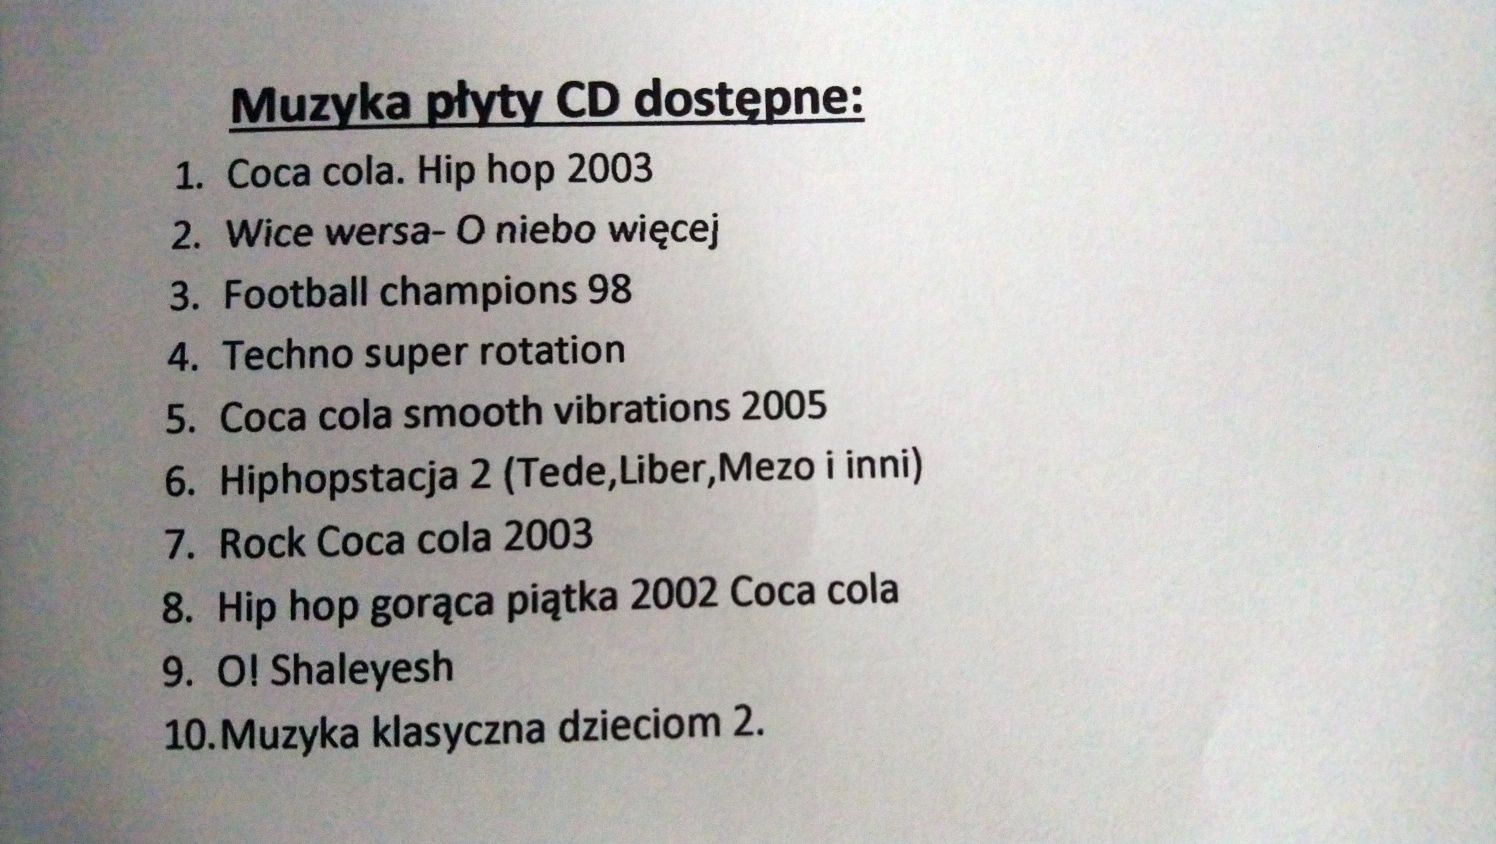 Coca cola smooth vibrations 2005